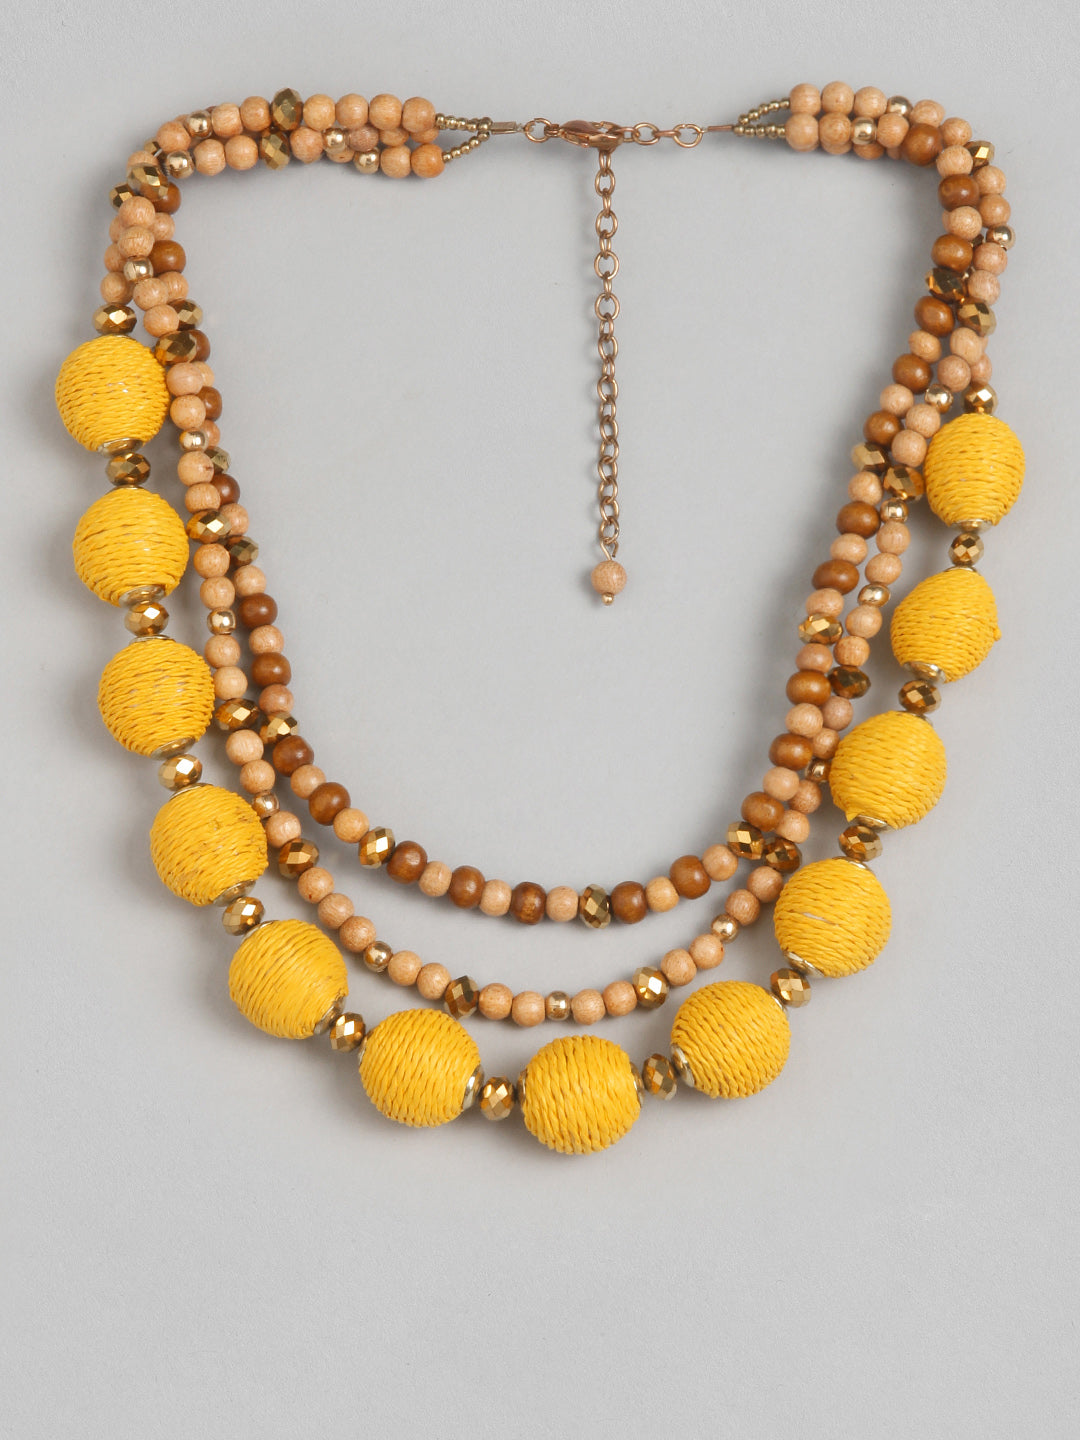 Pretty Yellow Necklace - Bib Necklace - Statement Necklace - $16.00 - Lulus